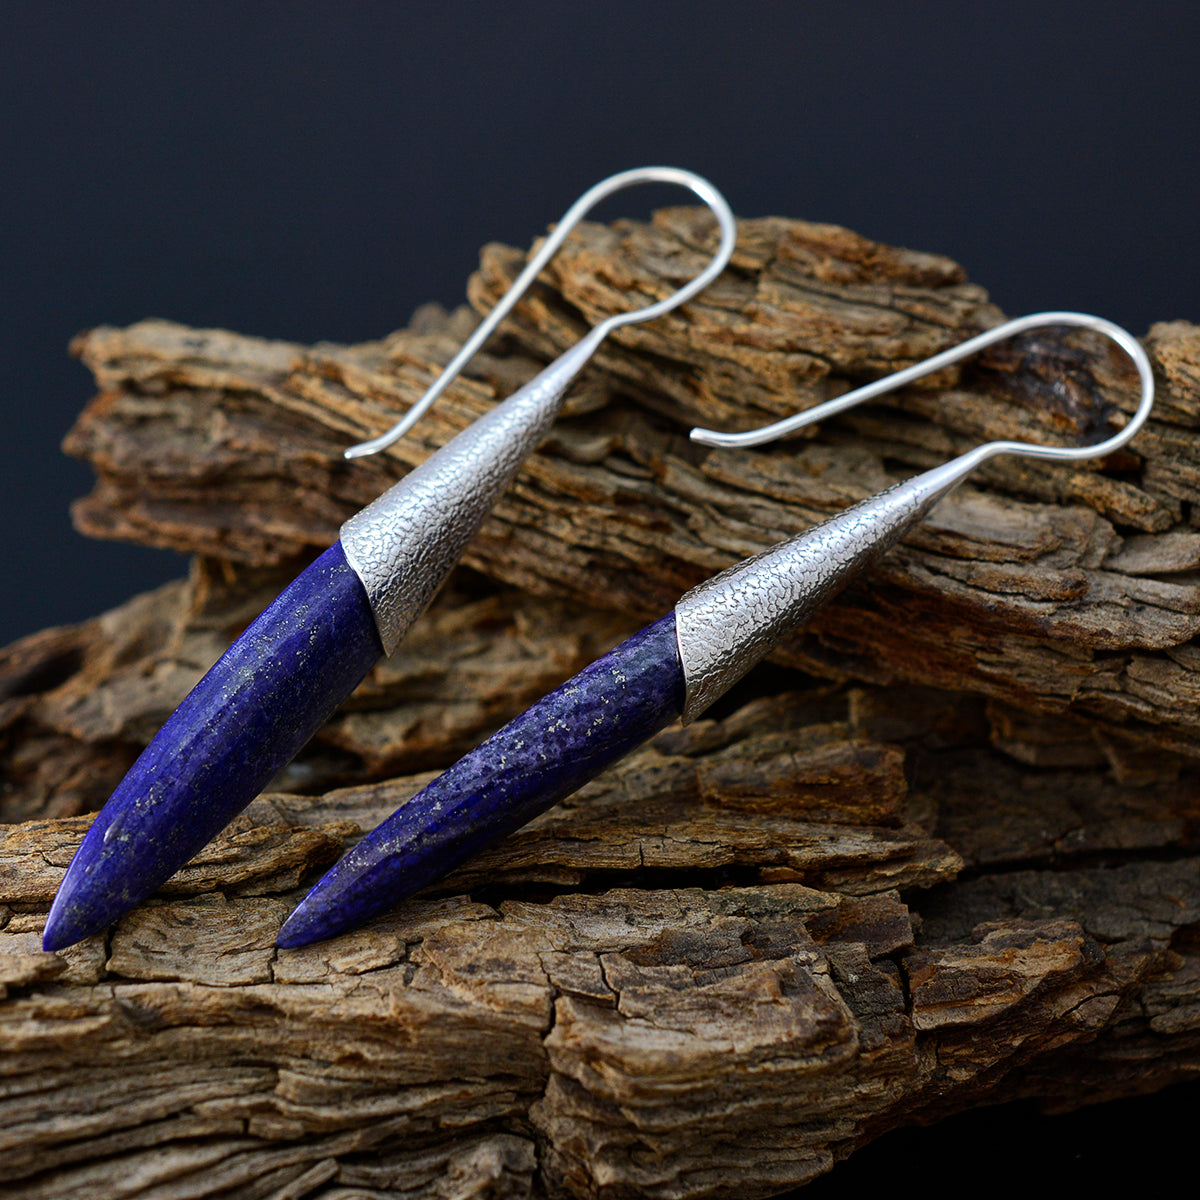 Riyo Nice Gemstone fancy Cabochon Nevy Blue Lapis Lazuli Silver Earrings gift for sister